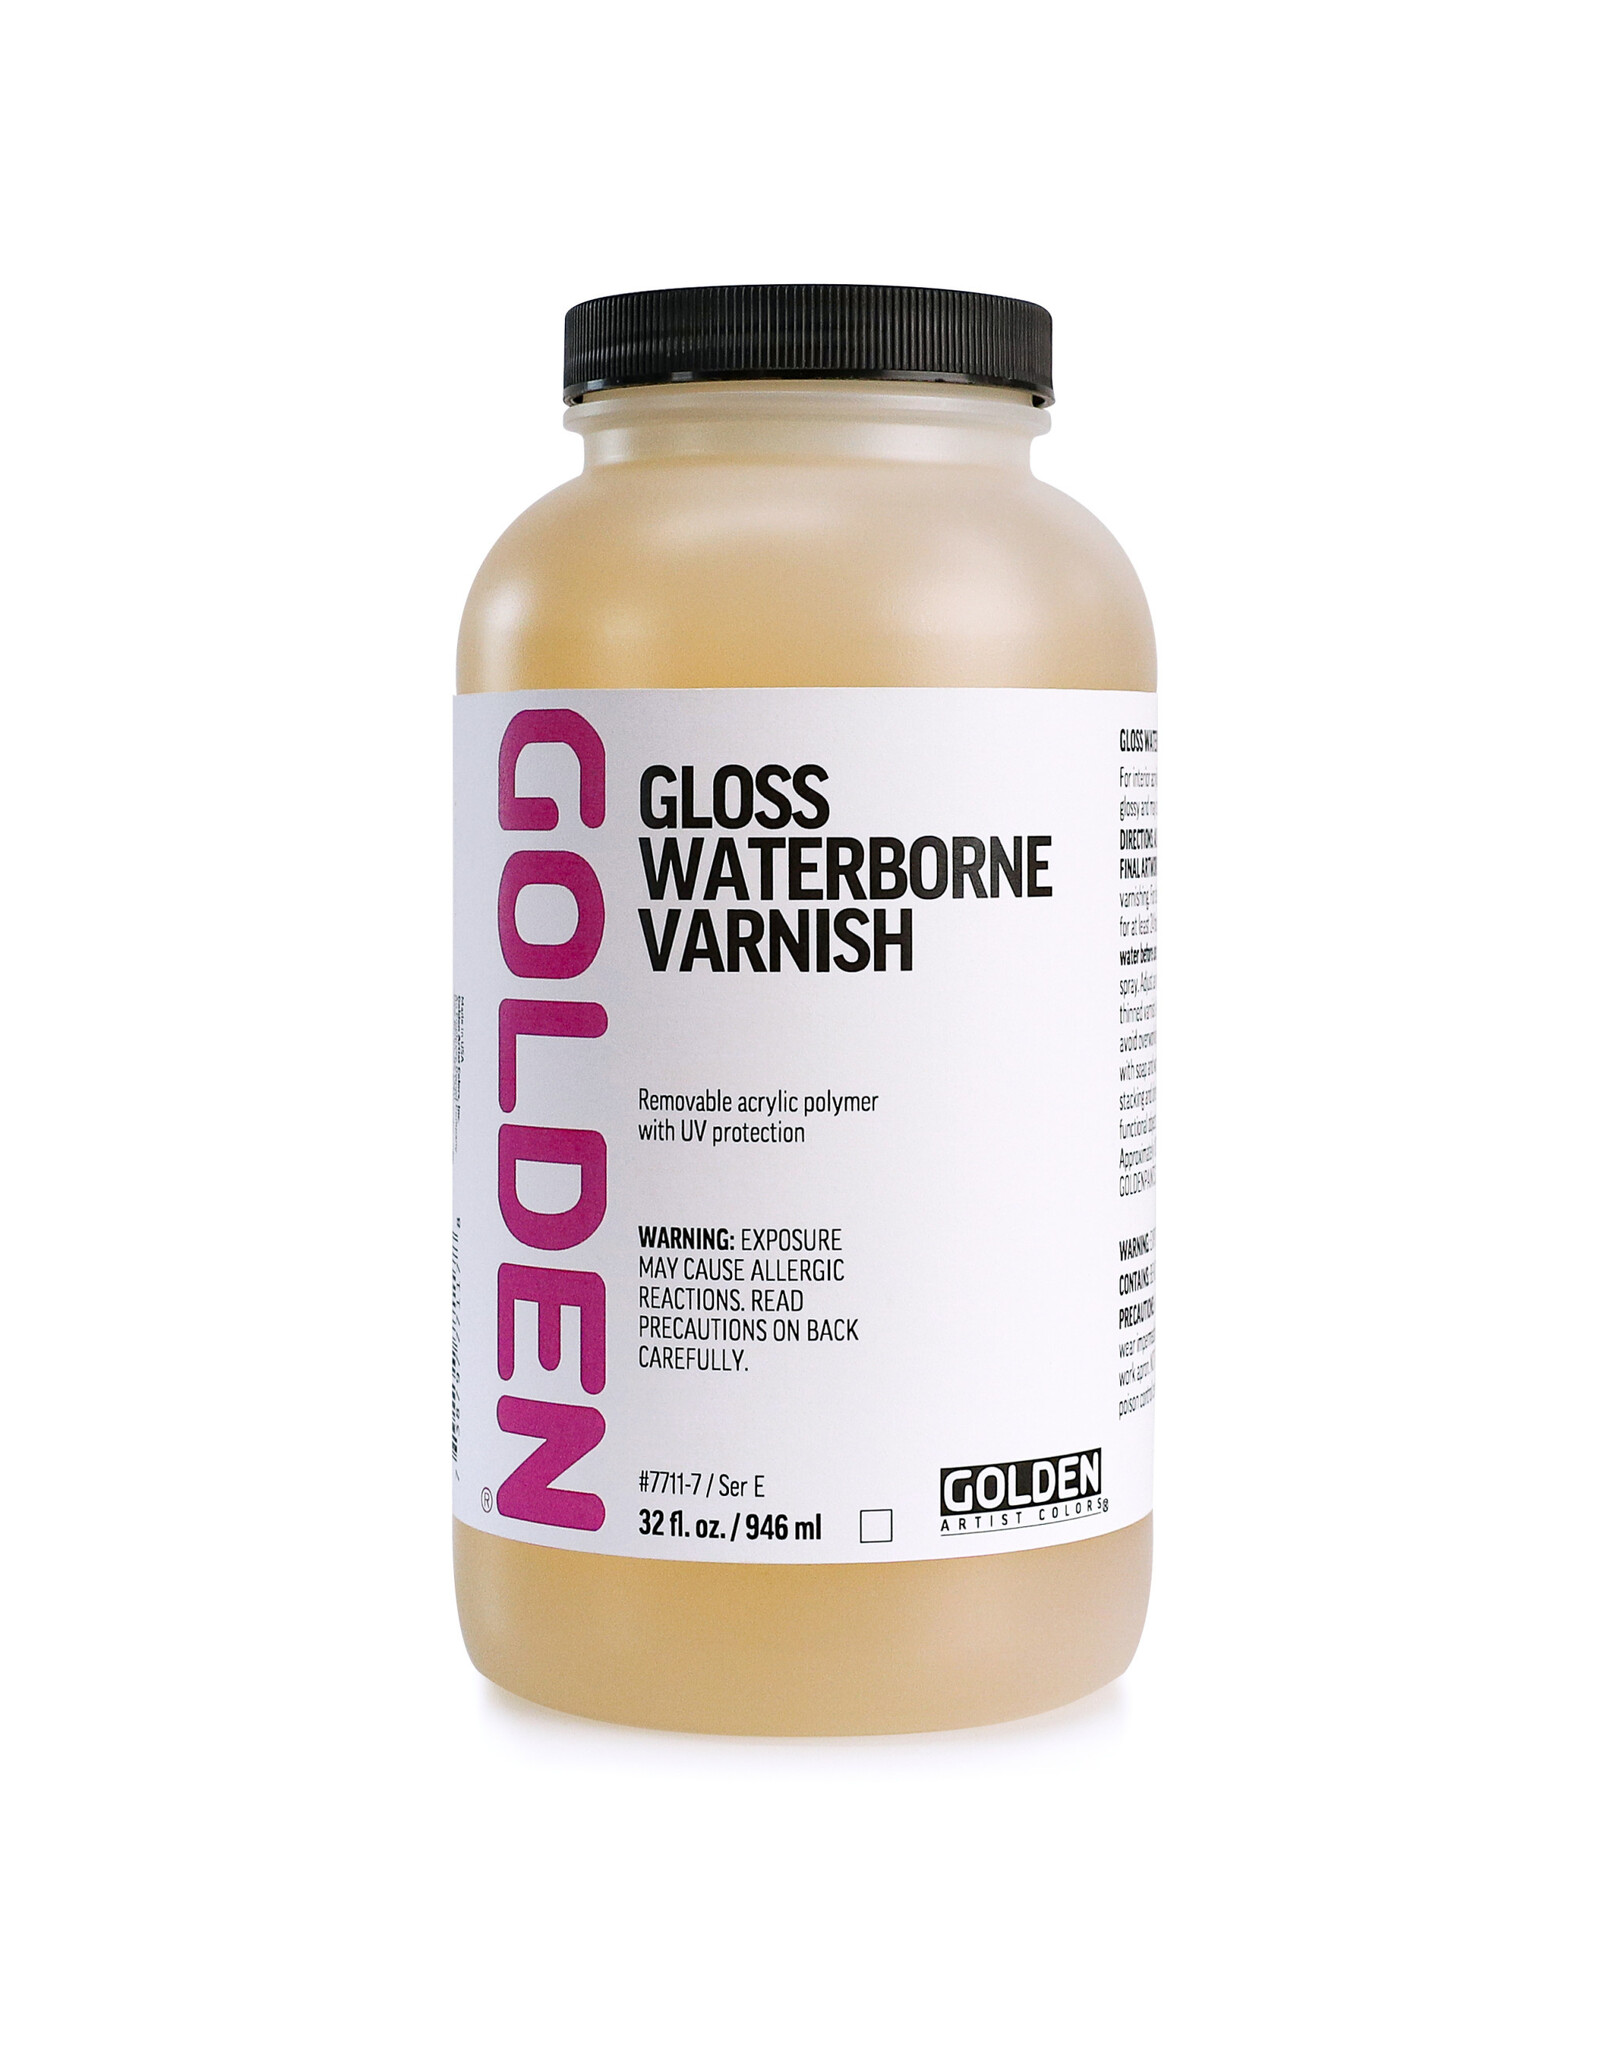 Golden Golden Gloss Waterborne Varnish, 32oz